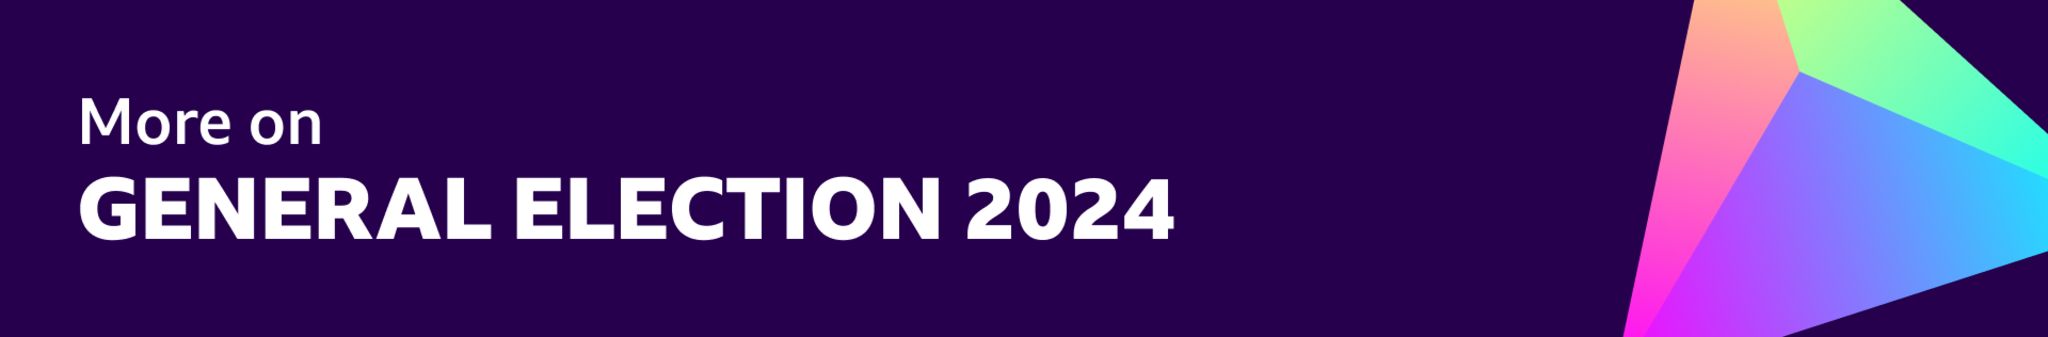 BBC general election branding on purple background